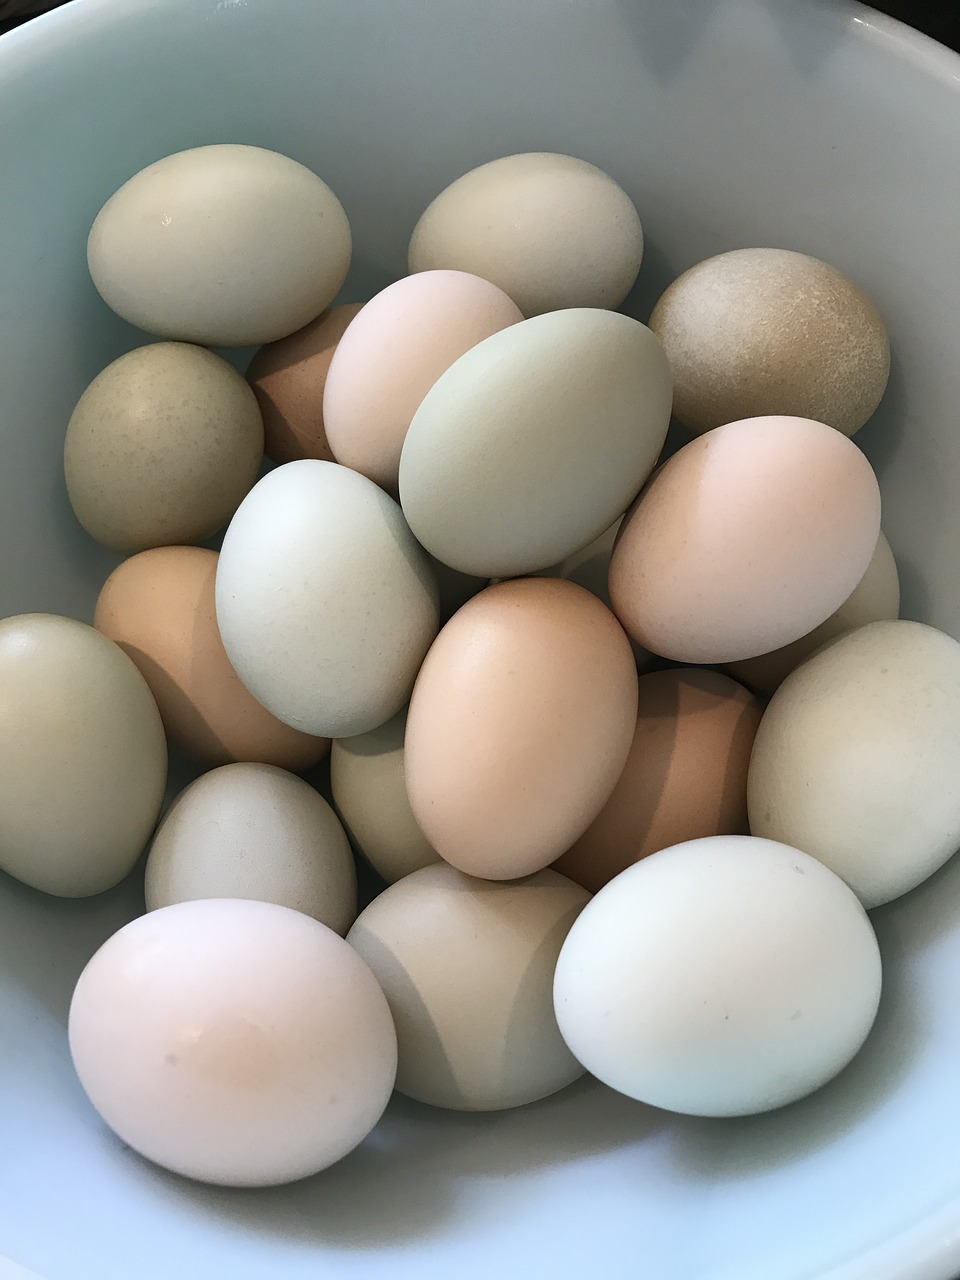 eggs pastel homegrown free photo